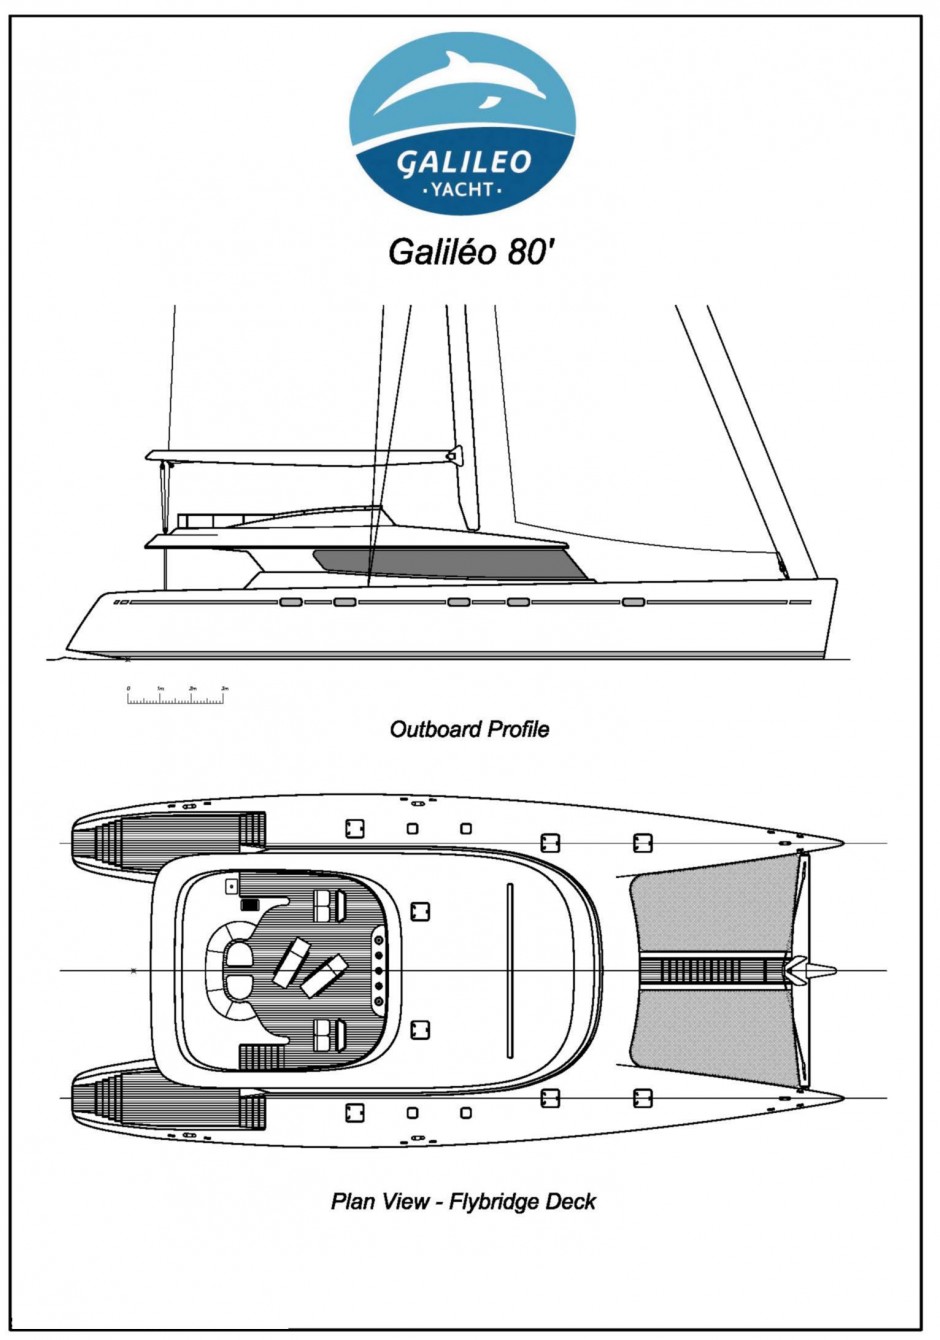 Le Galiléo 80' : un catamaran voile, design Galileo Yacht Simon.